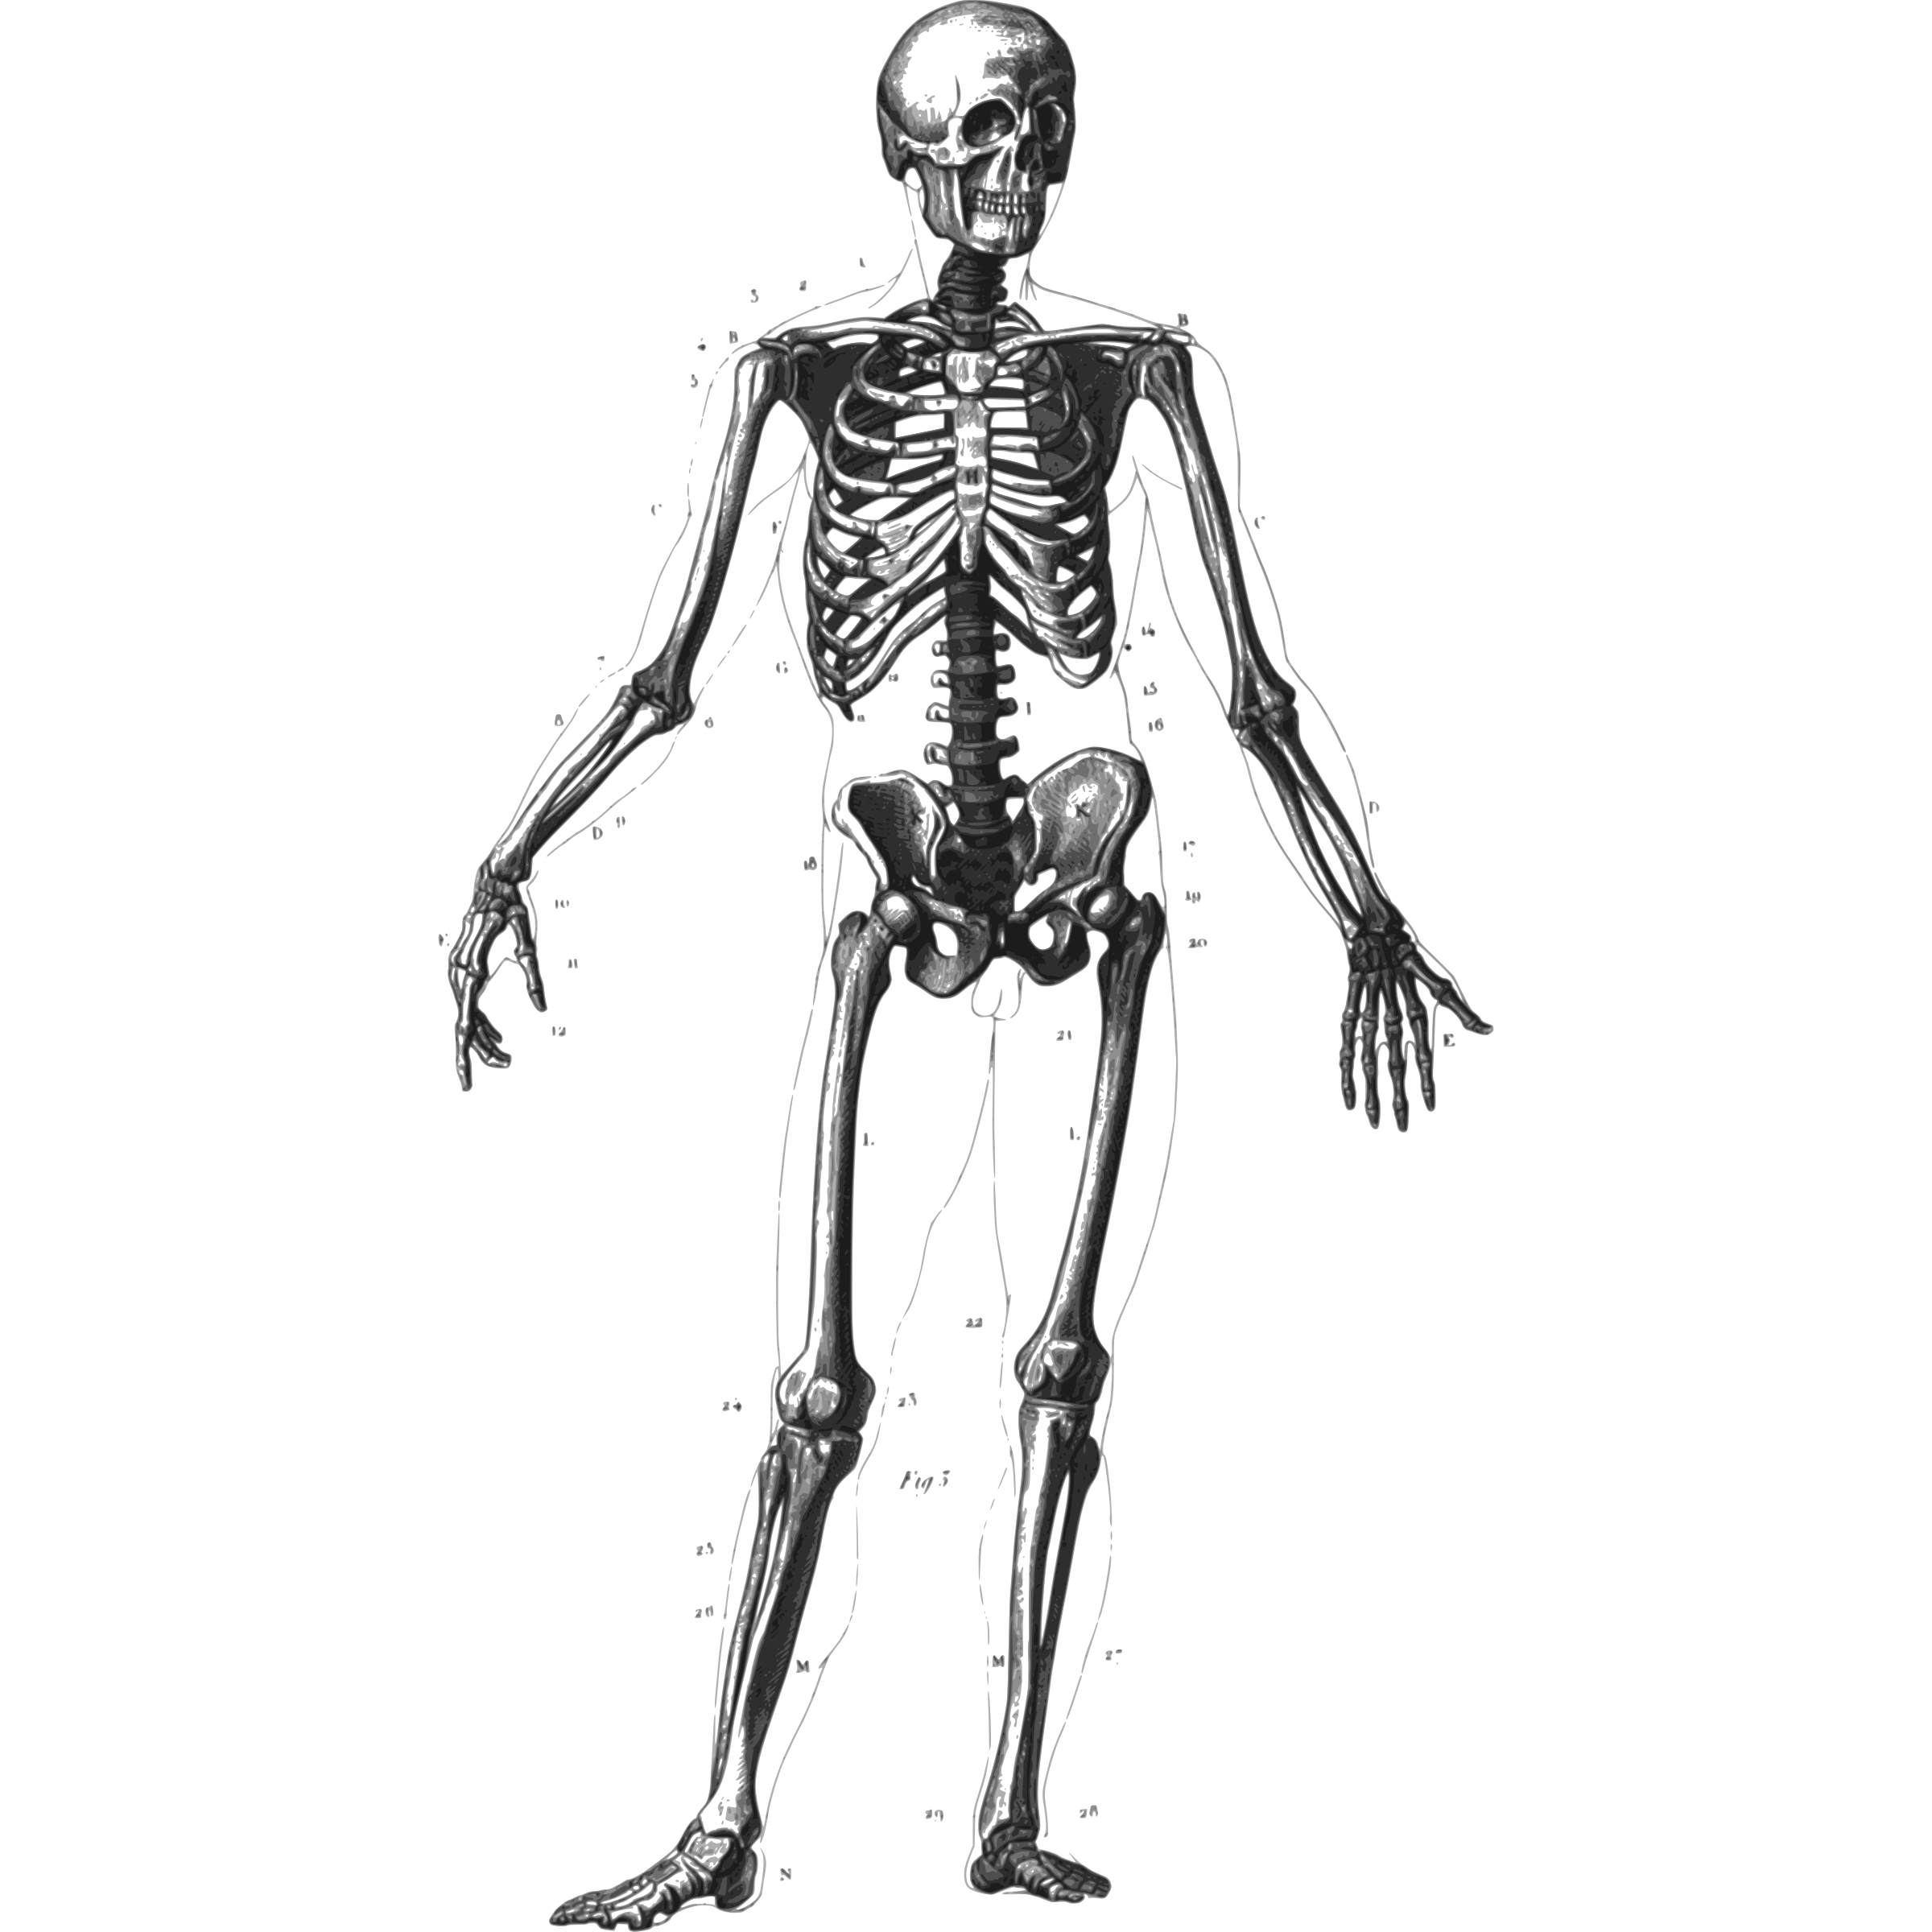 Free Human Skeleton Png, Download Free Clip Art, Free Clip.